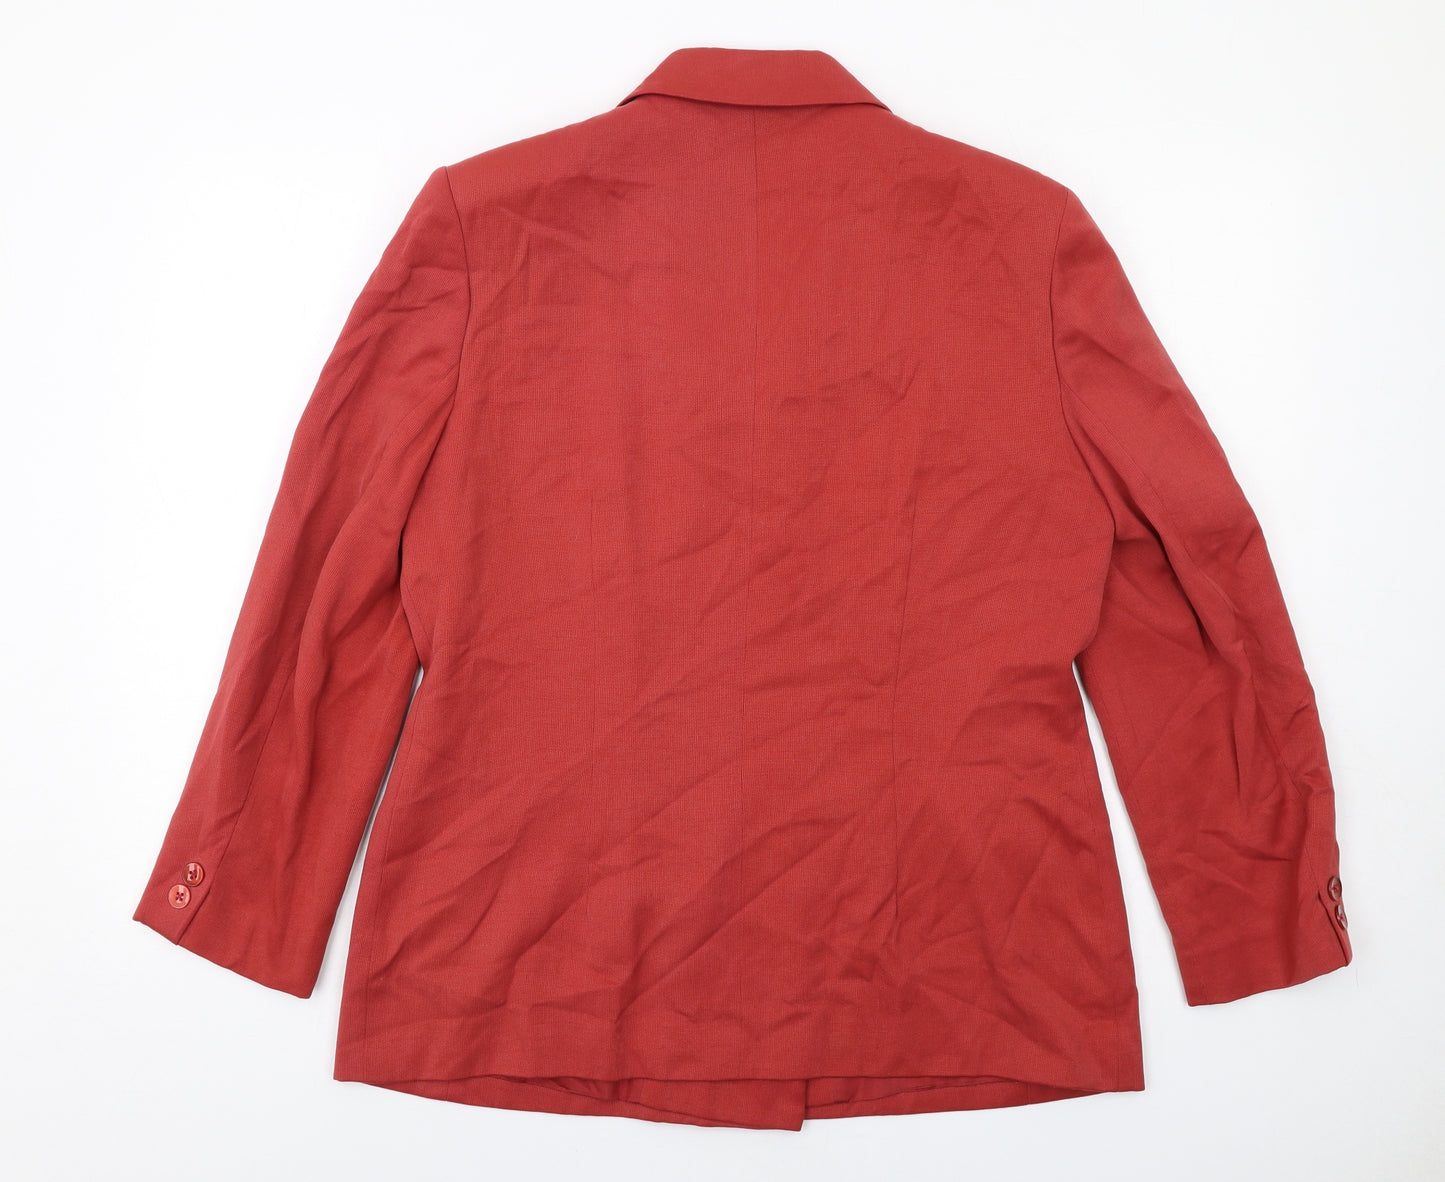 Principles Womens Red Jacket Blazer Size 16 Button